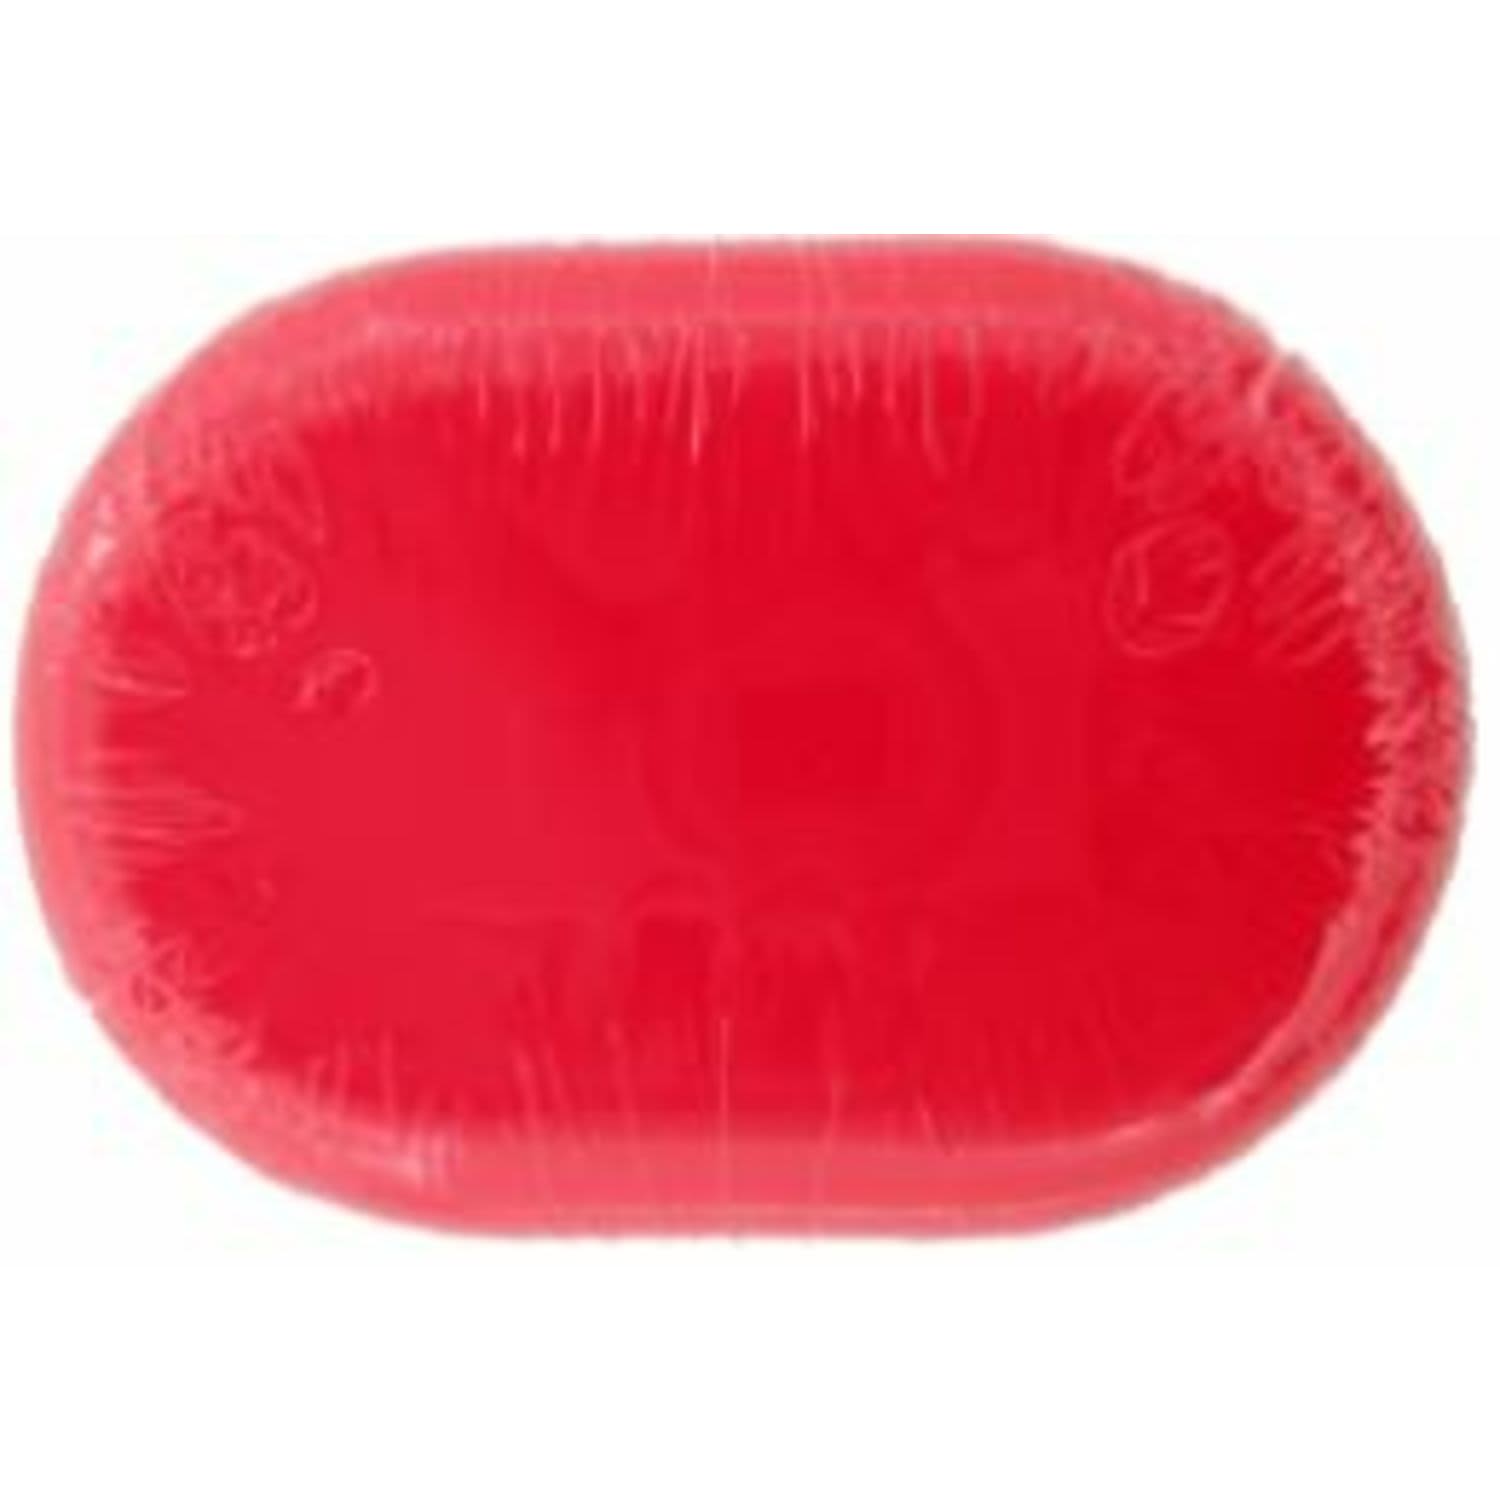 Redberry Soap Case, 1 Each